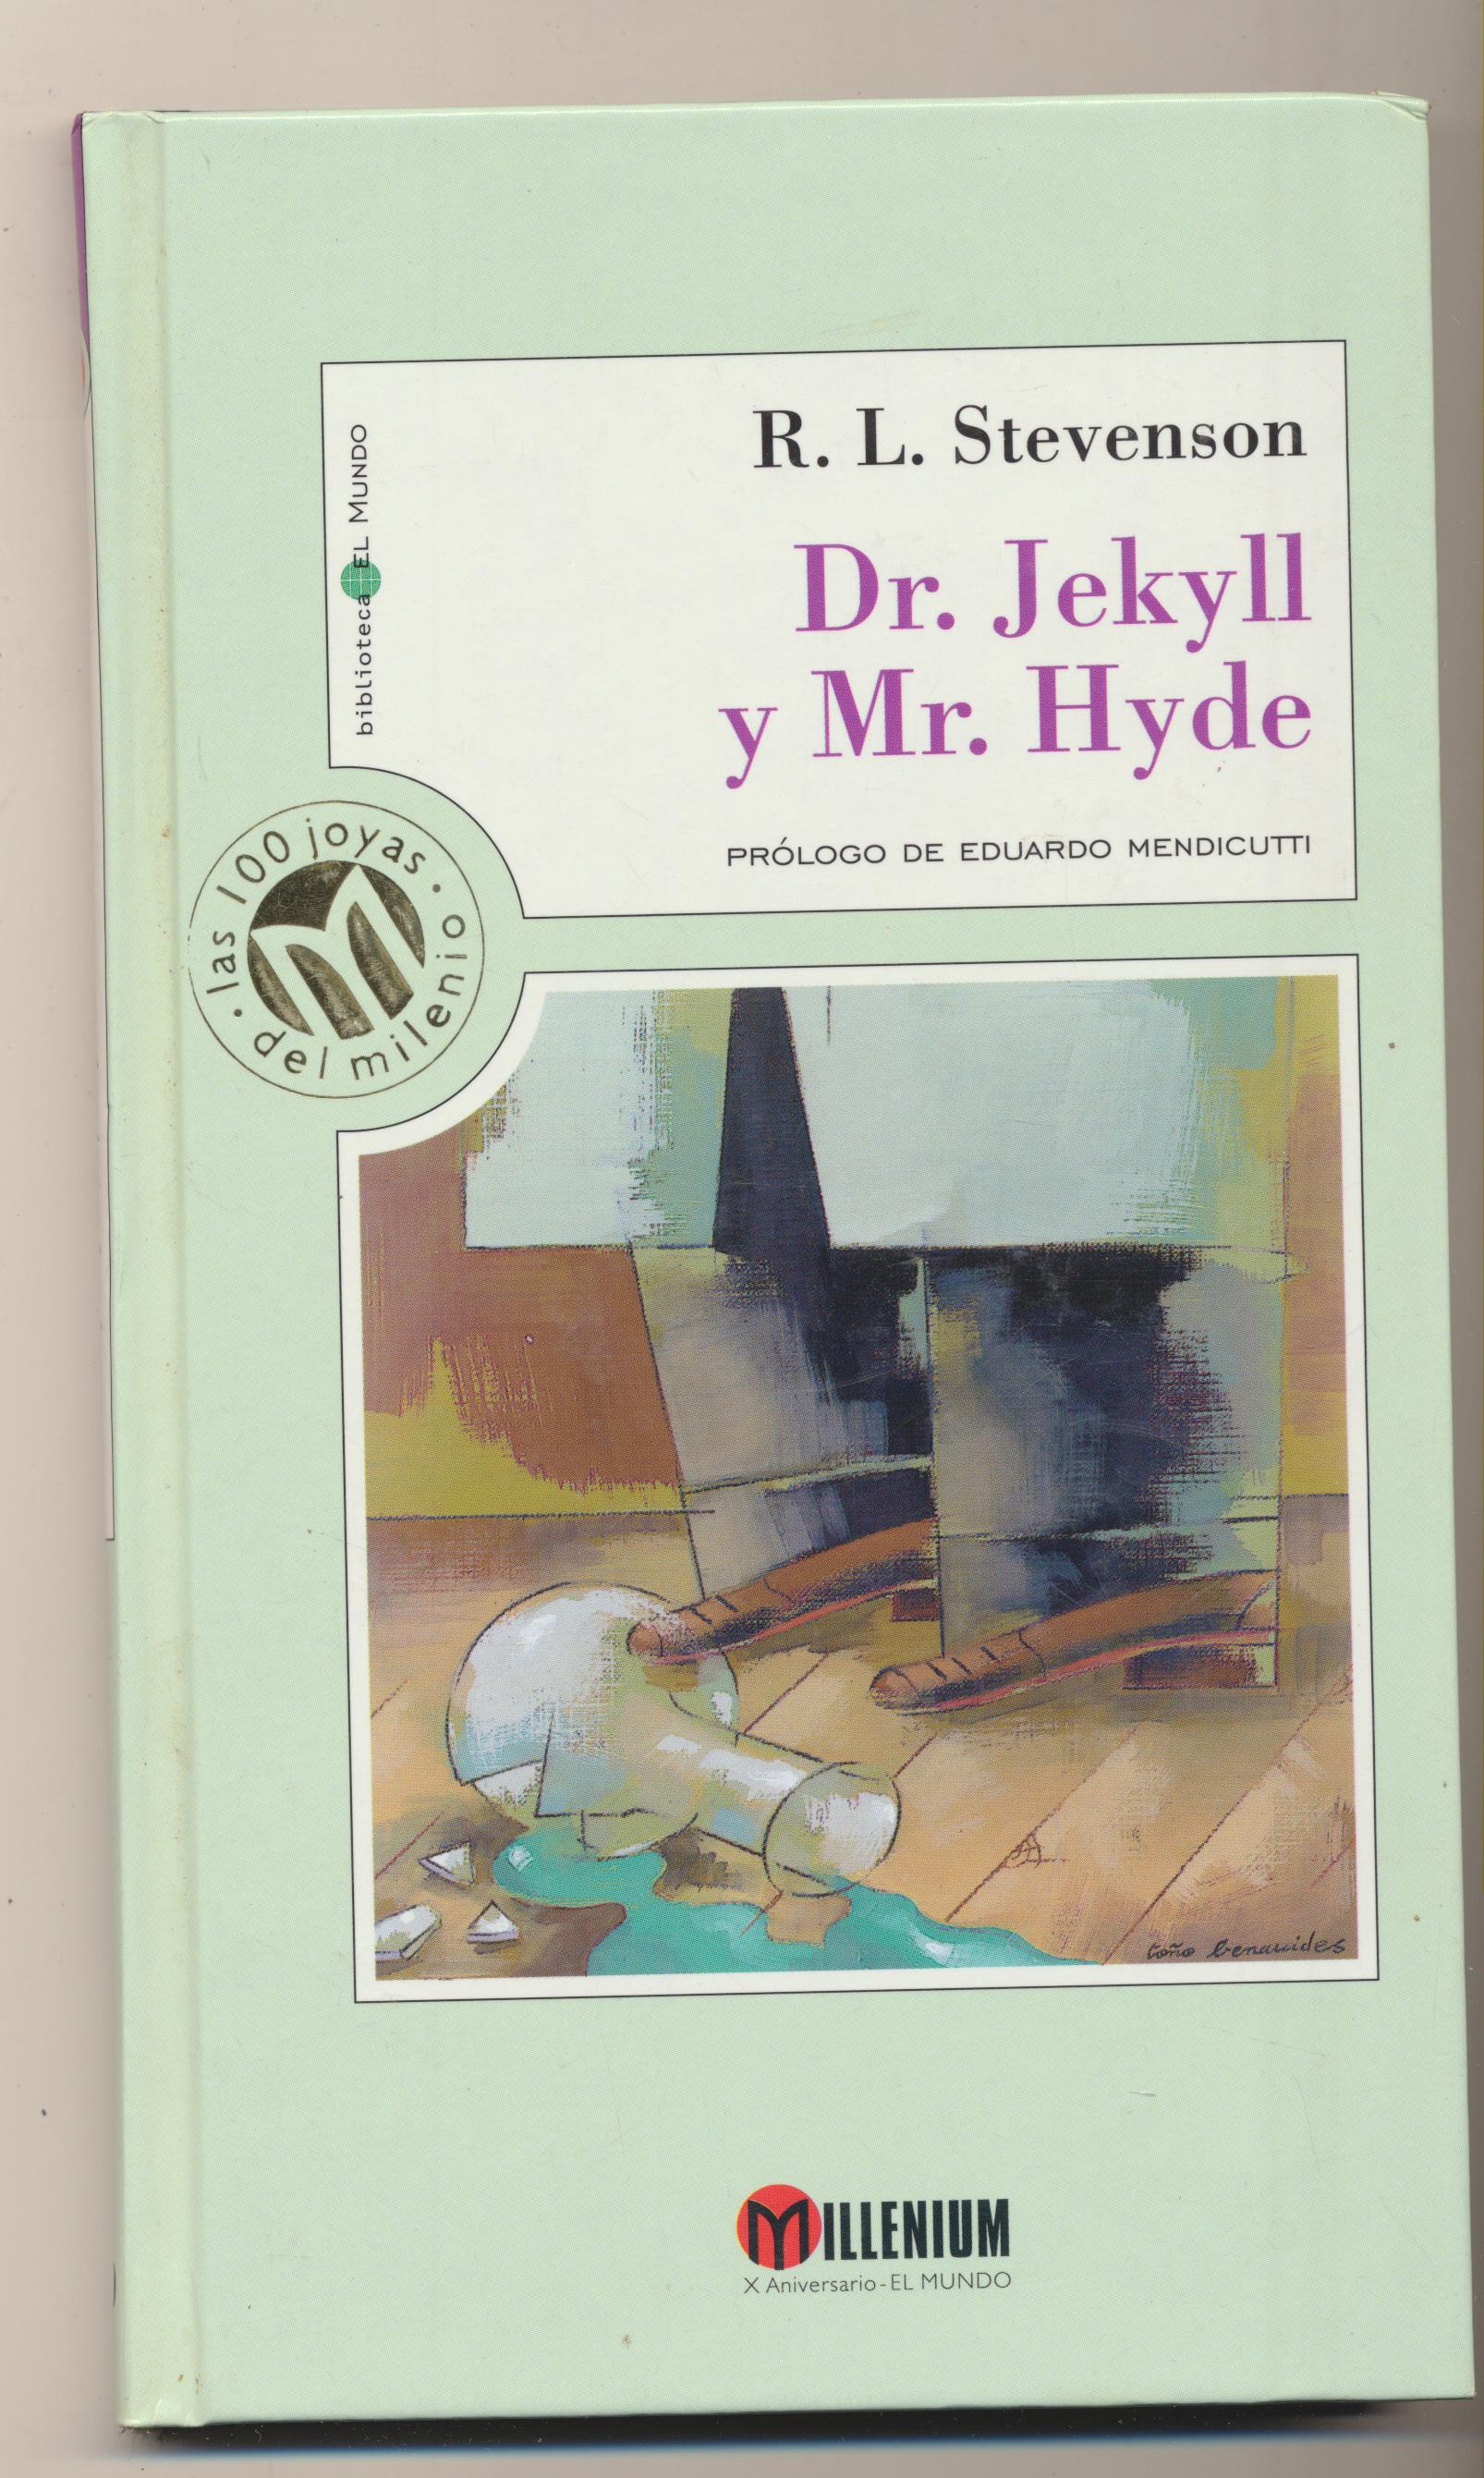 R. L. Stevenson. Dr. Jekyll y Mr. Hyde. Millenium 1999